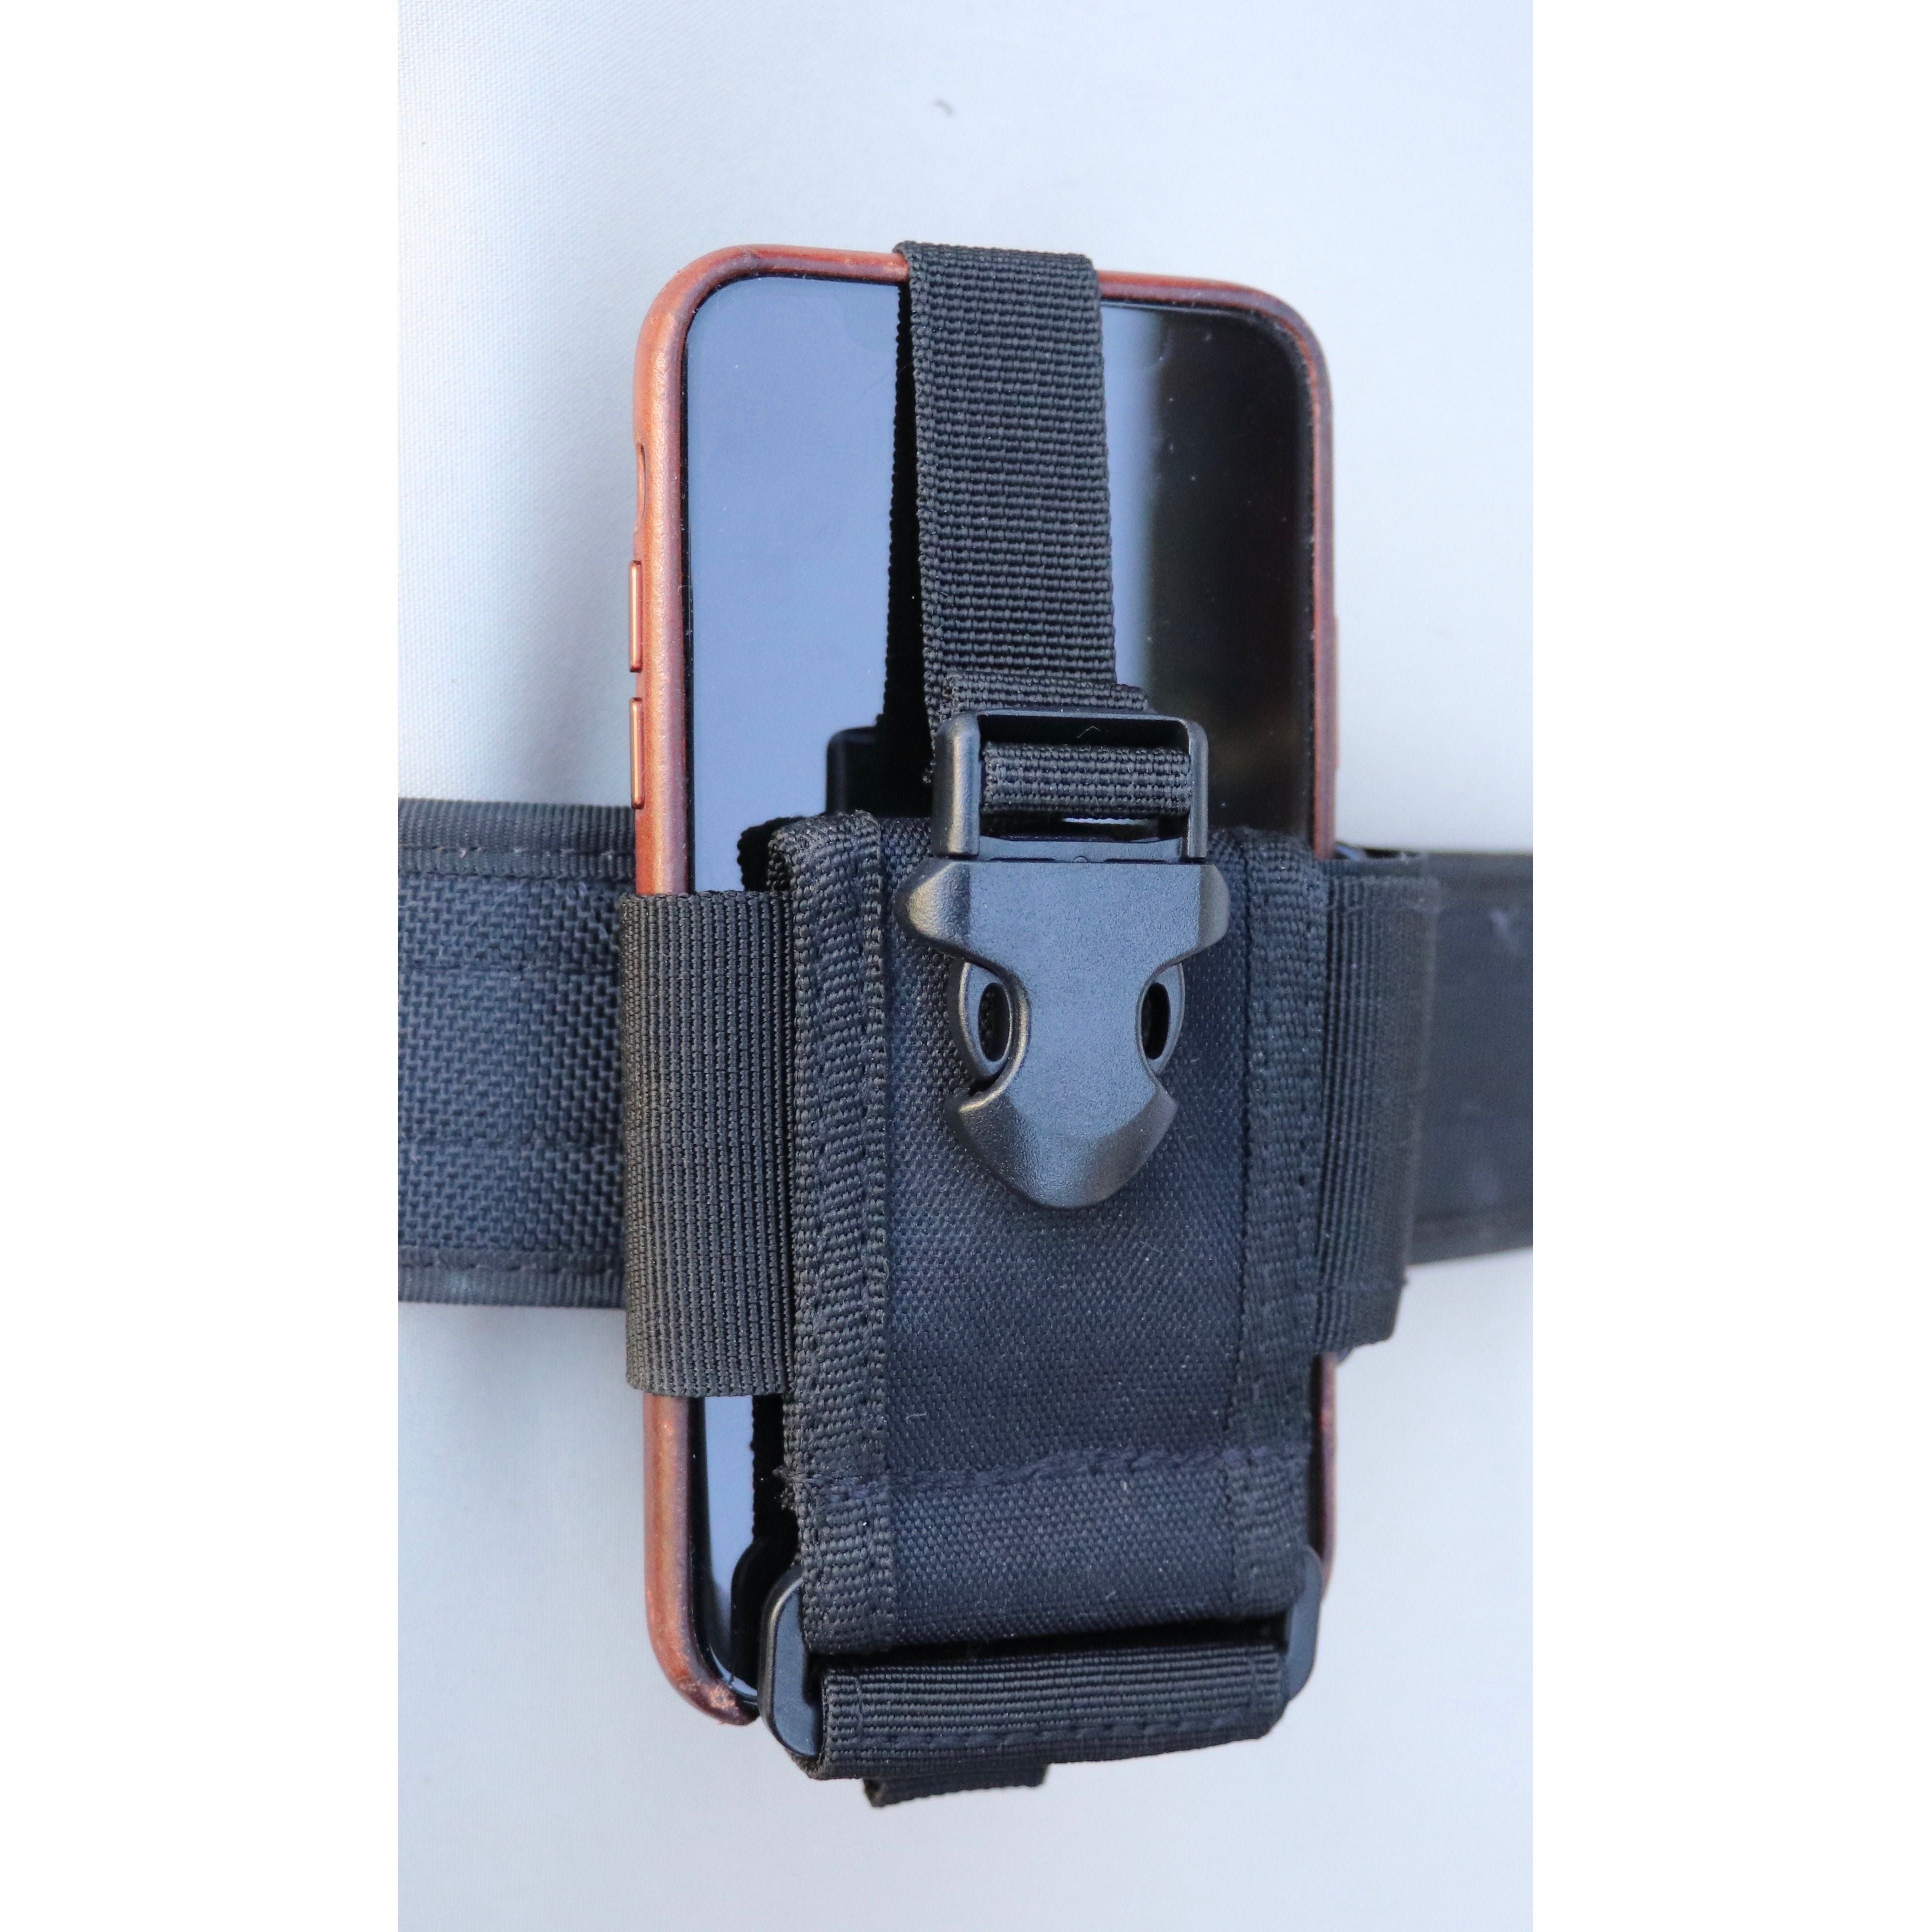 CEST Molle Handy/FUG holster